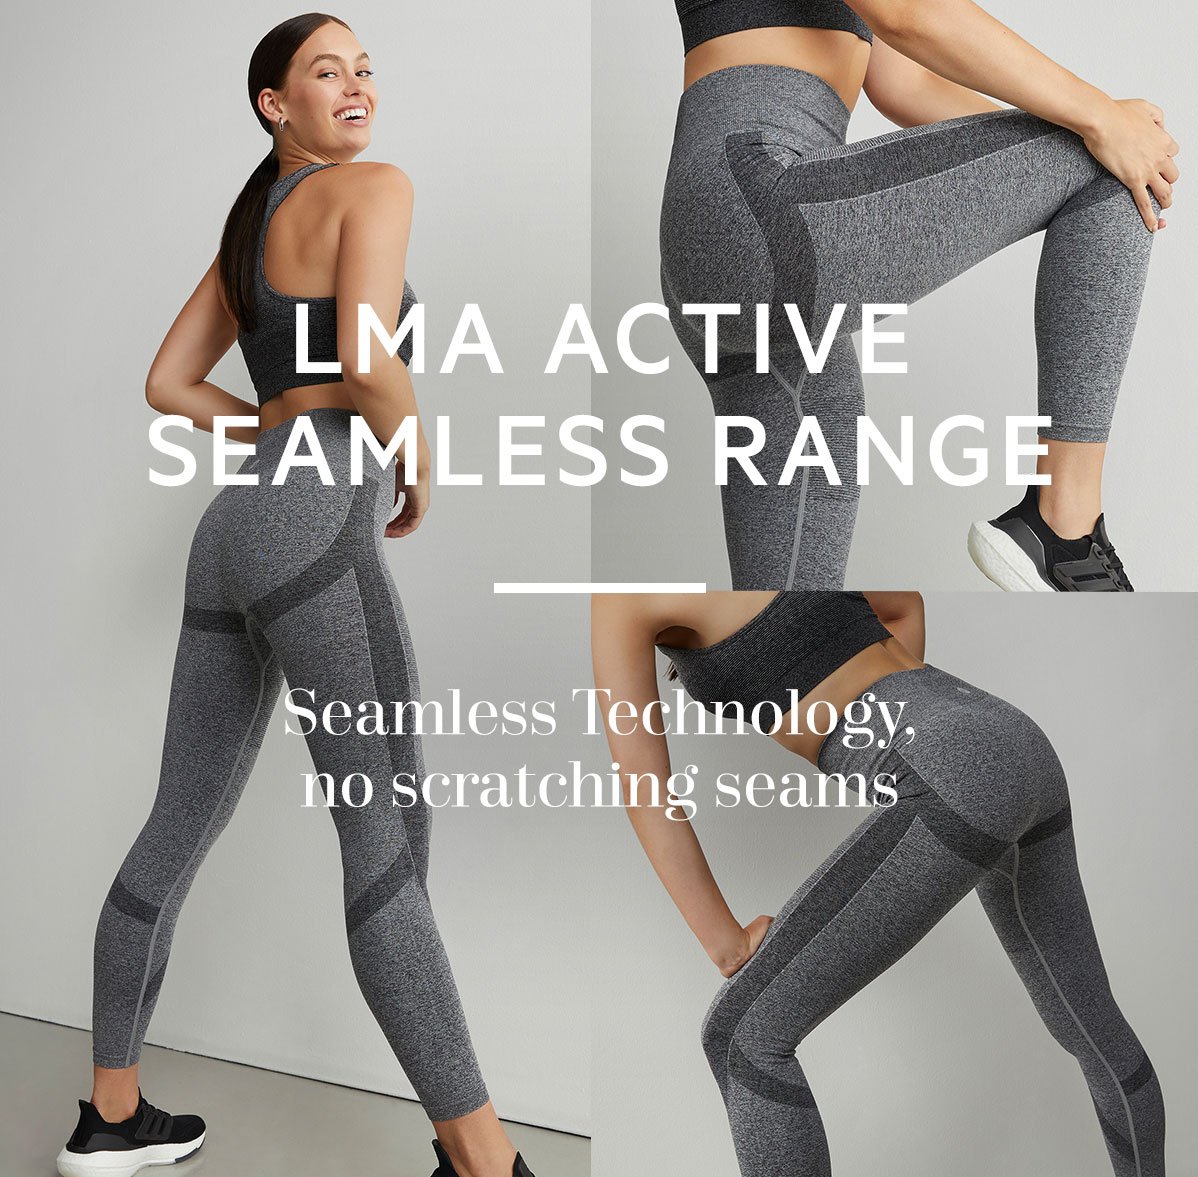 LMA Active Seamless Range